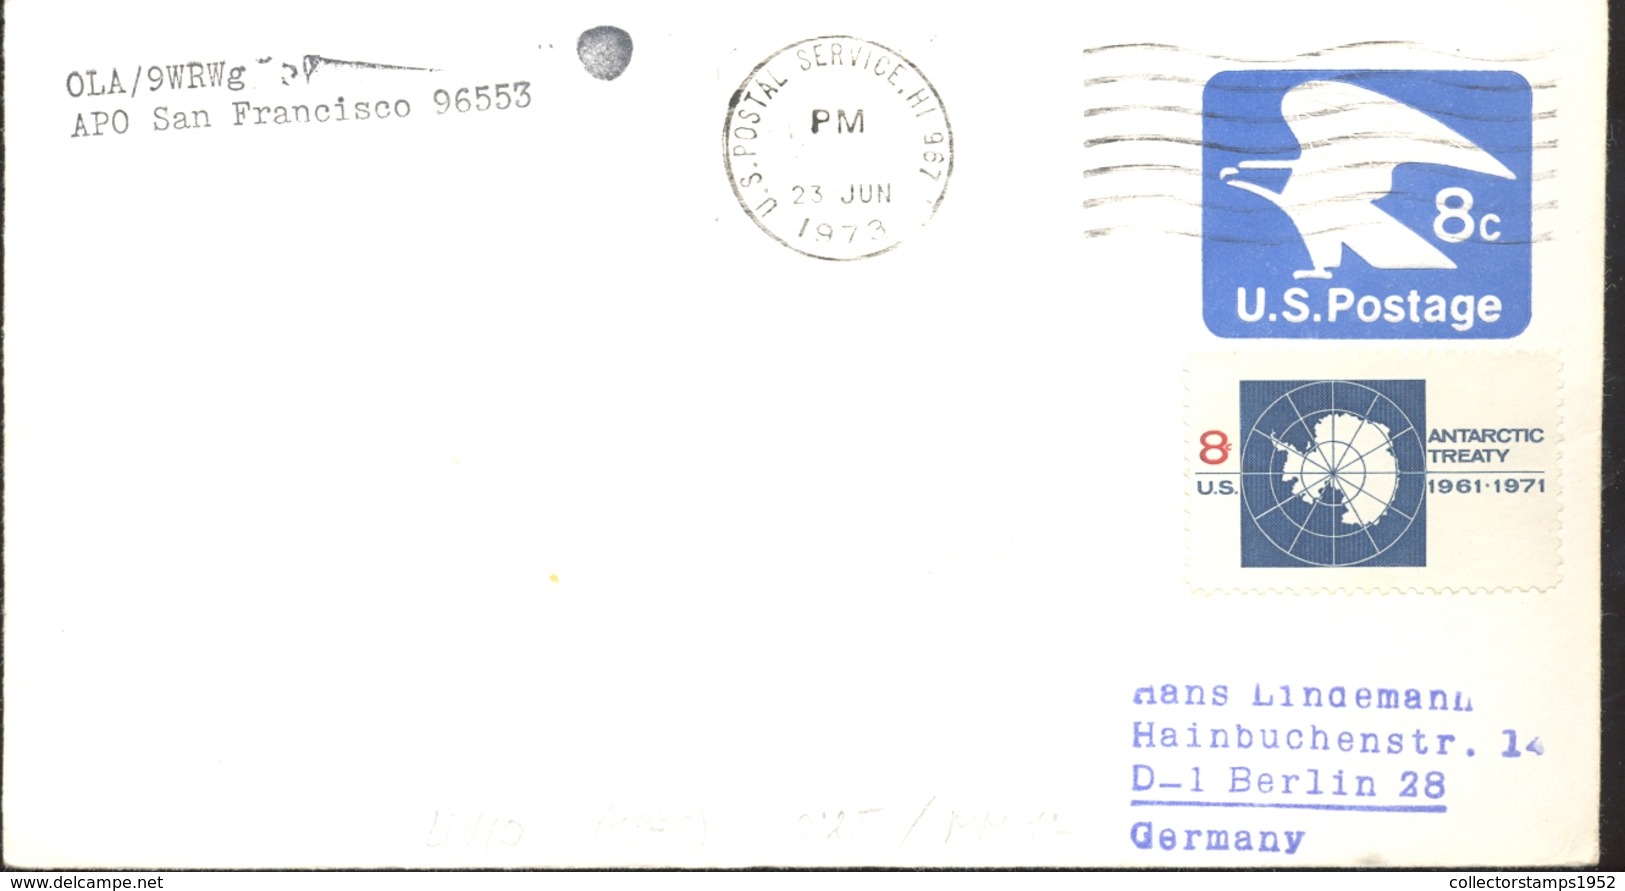 74312- ANTARCTIC TREATY, SOUTH POLE STAMP, EAGLE EMBOISED COVER STATIONERY, 1973, USA - Antarktisvertrag